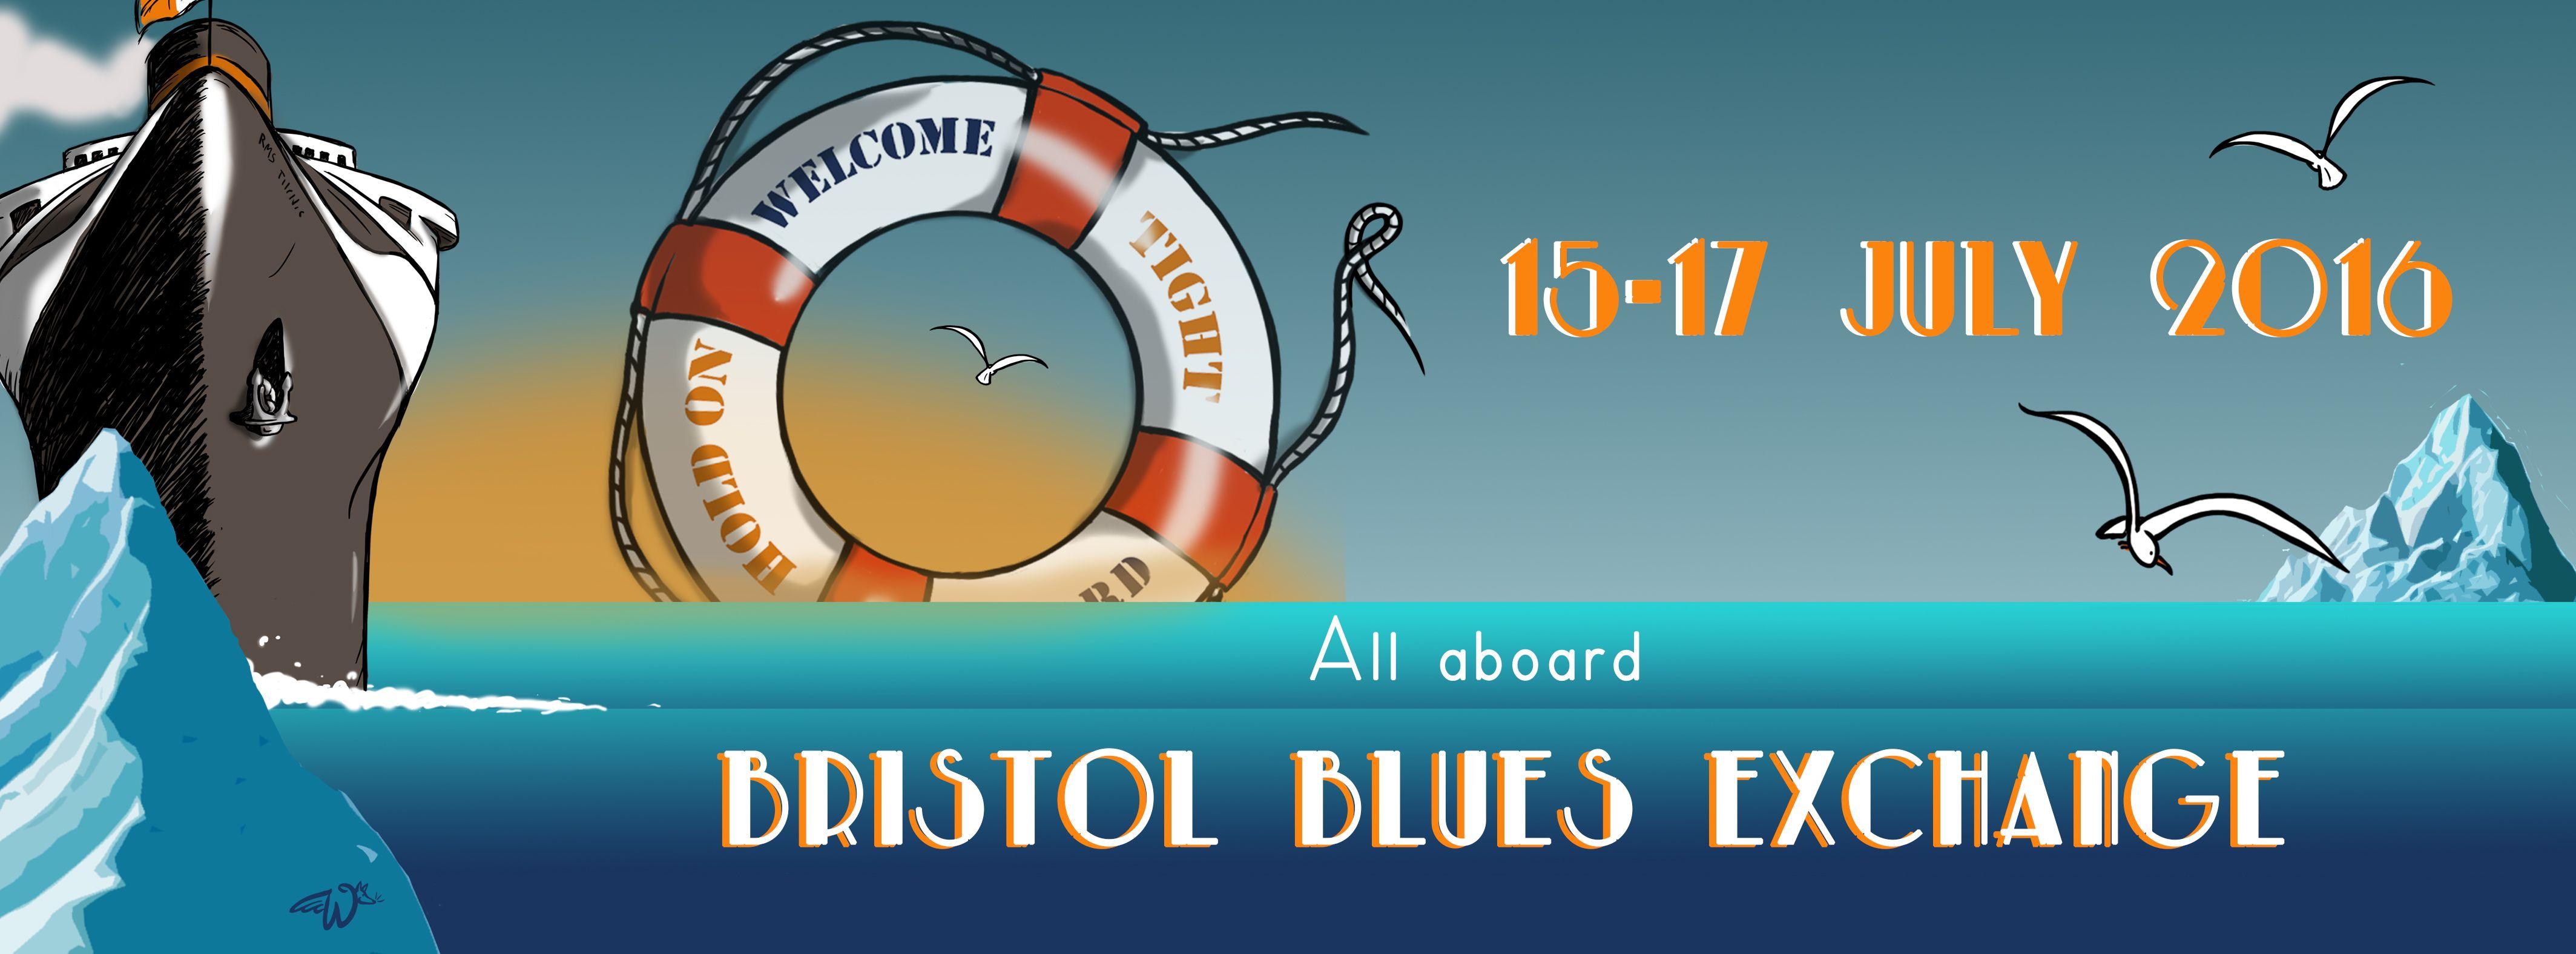 Bristol Blues Logo - Home. Bristol Blues Exchange